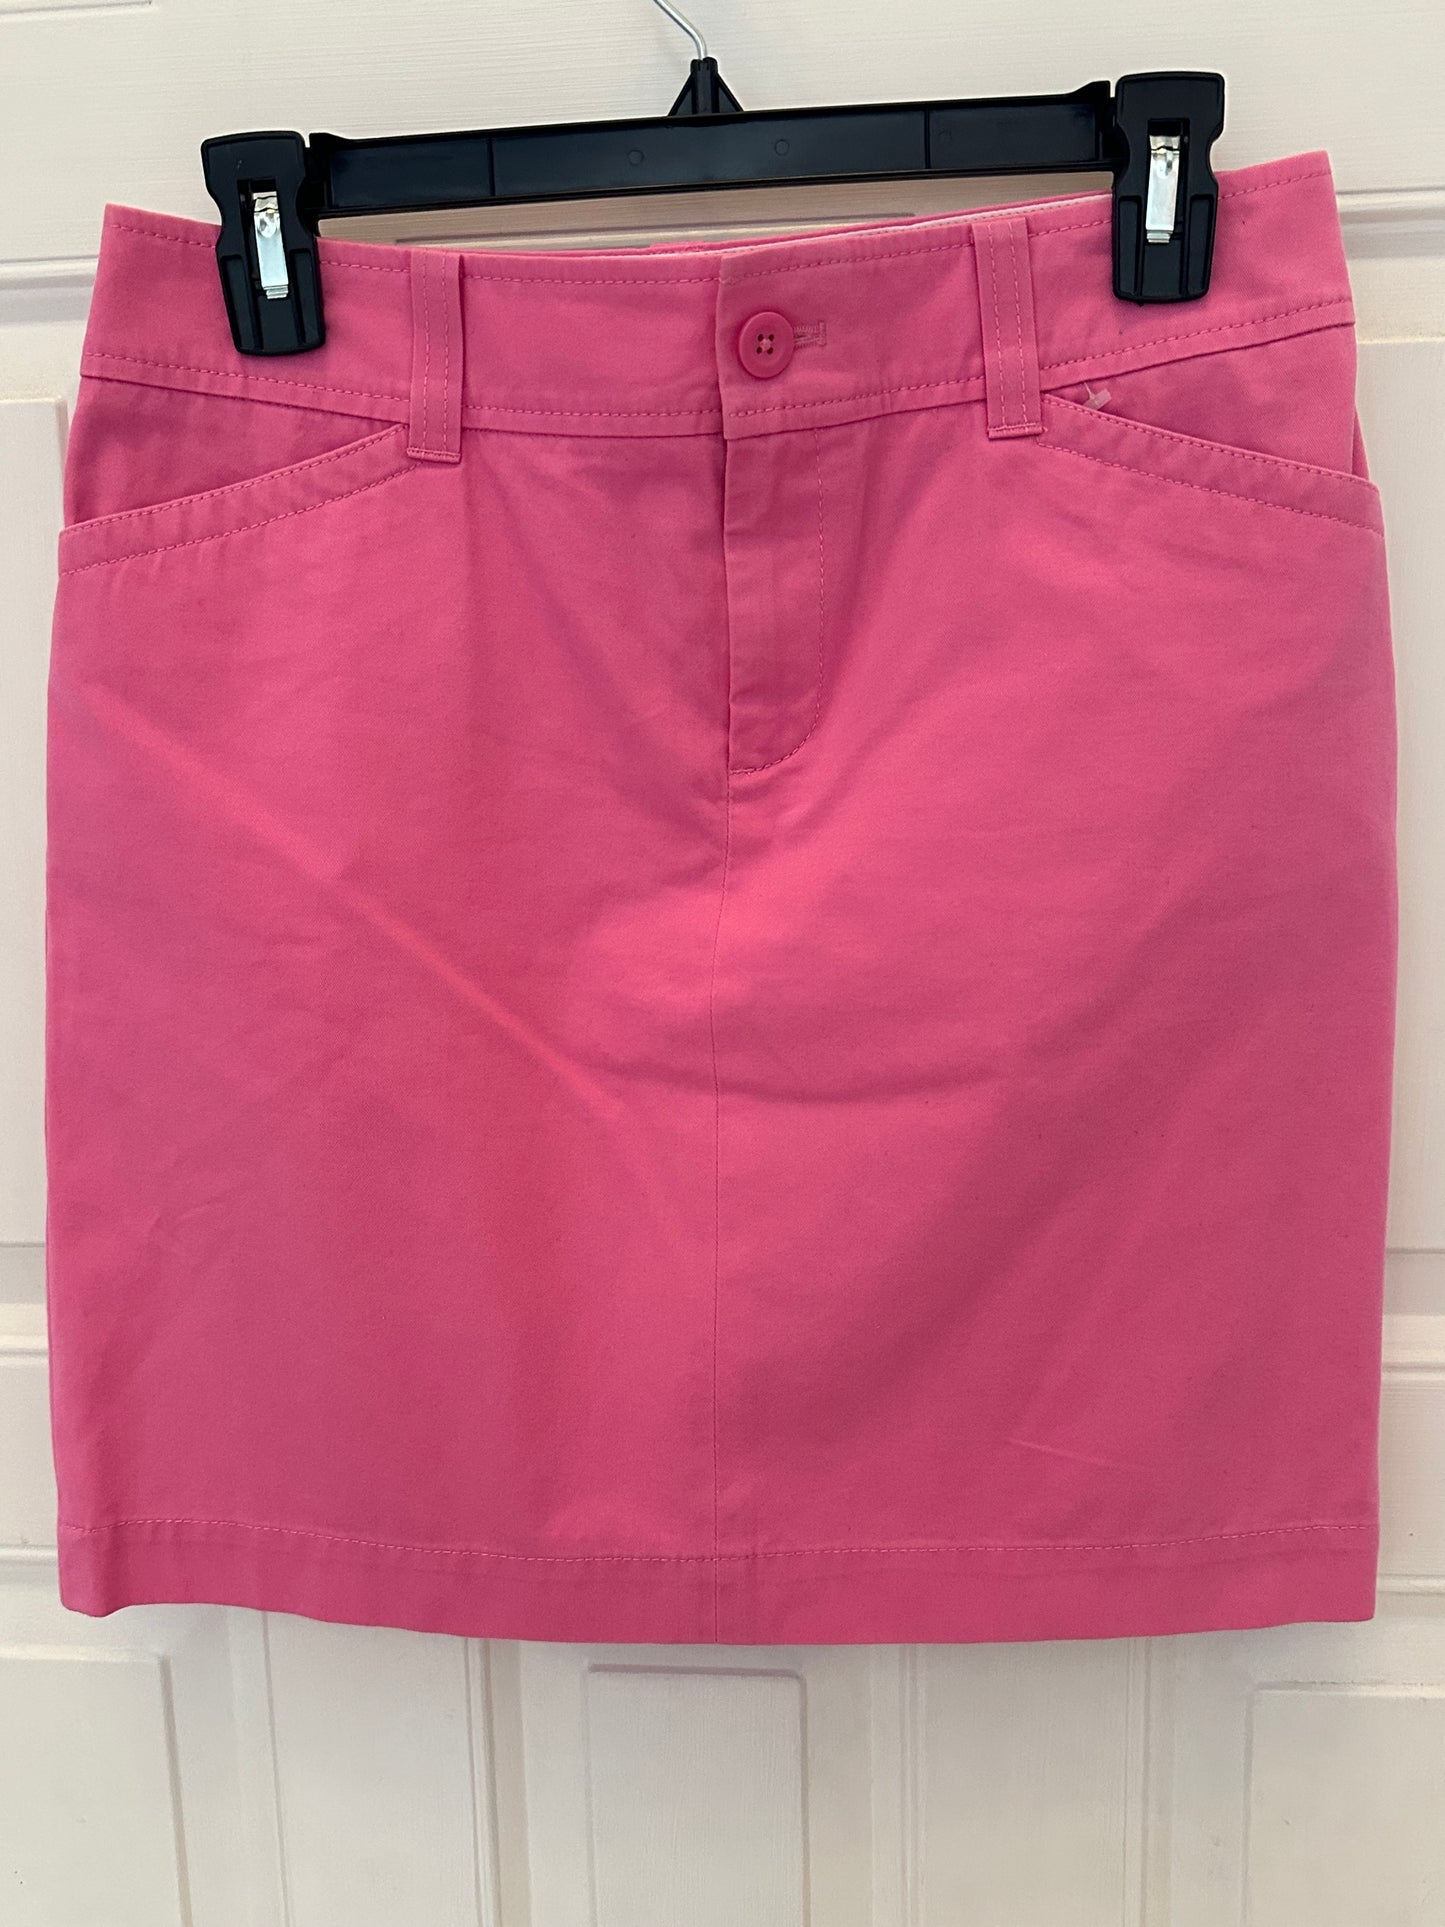 Lilly Pulitzer Women’s Pink A line Skirt Sz 2